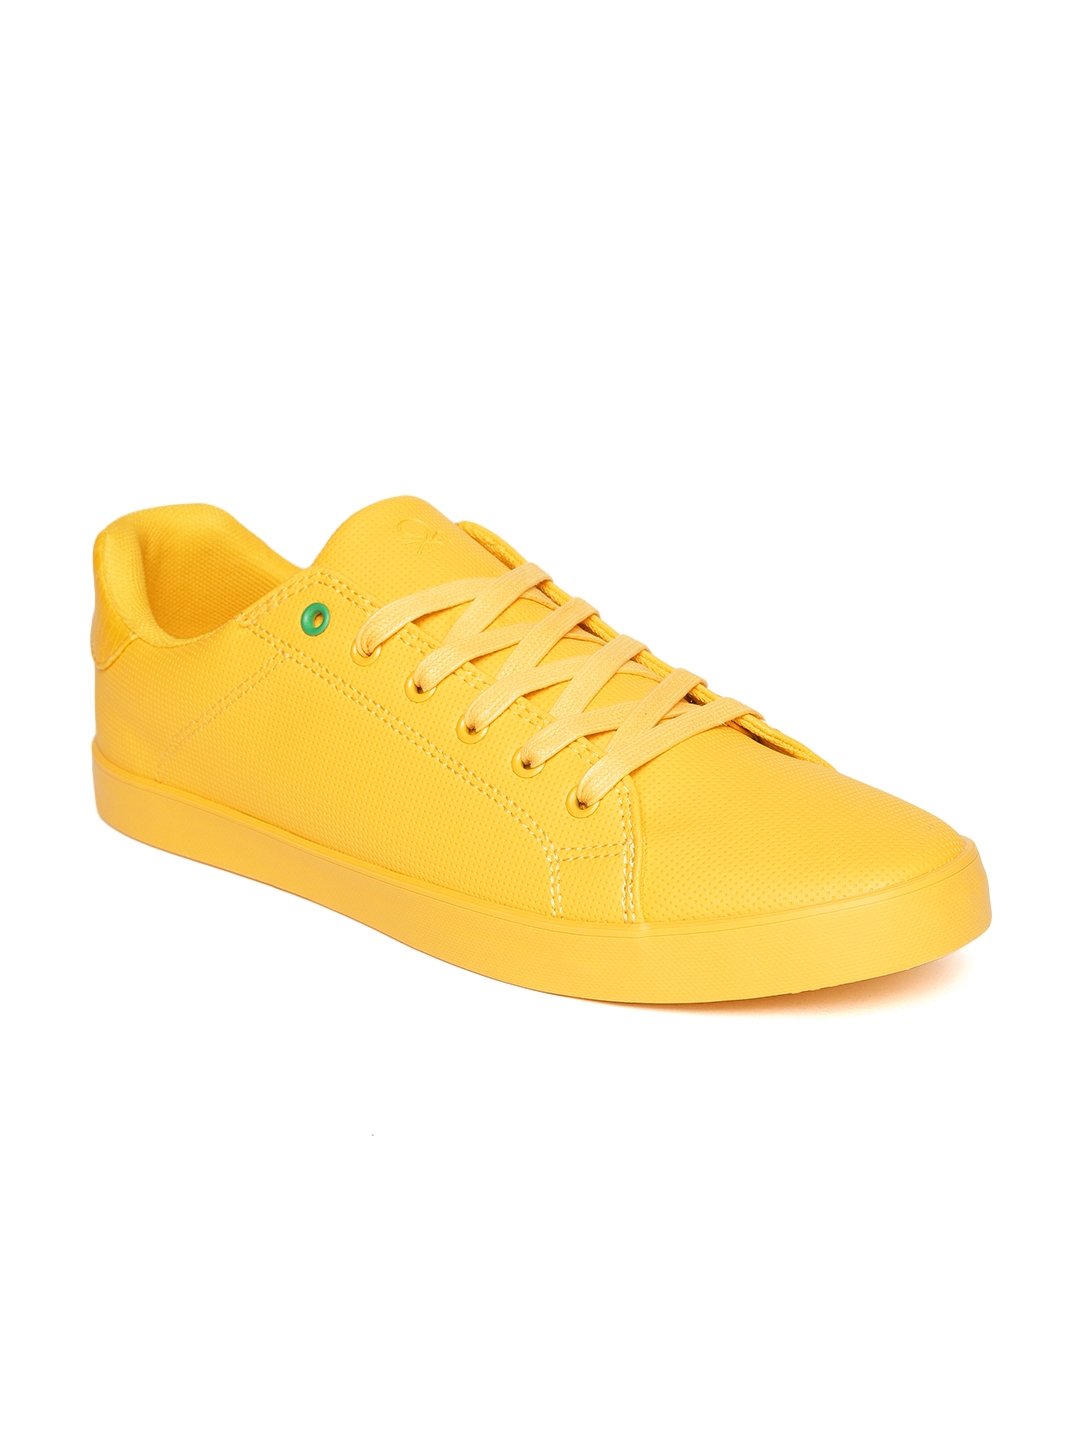 Benetton Men Mustard Yellow Sneakers 